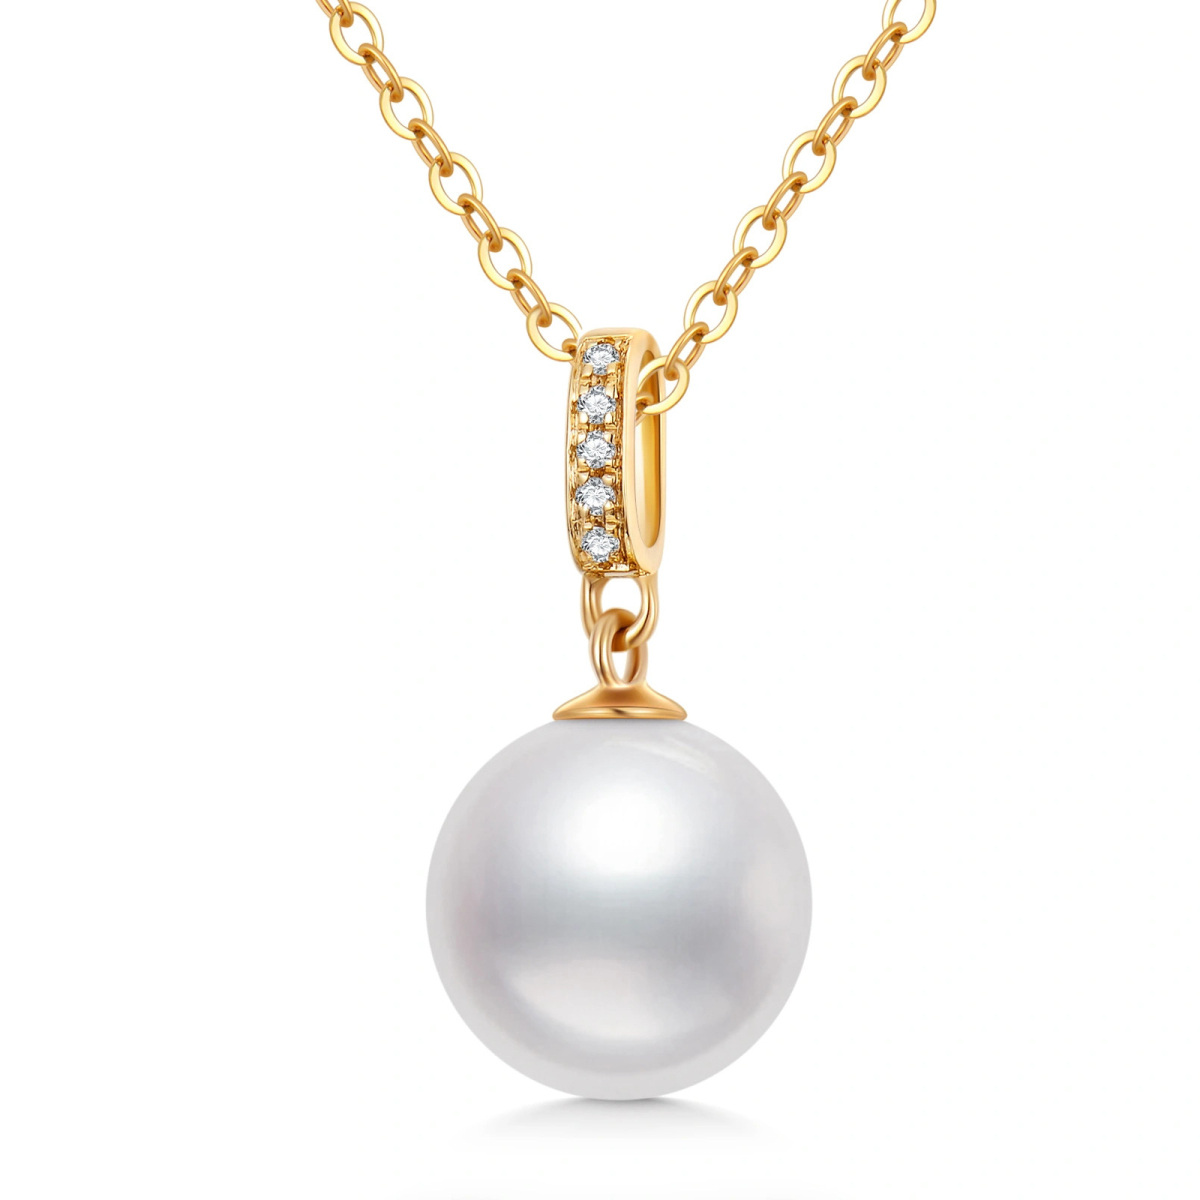 Collier en or 14K avec pendentif en forme de perle circulaire-1